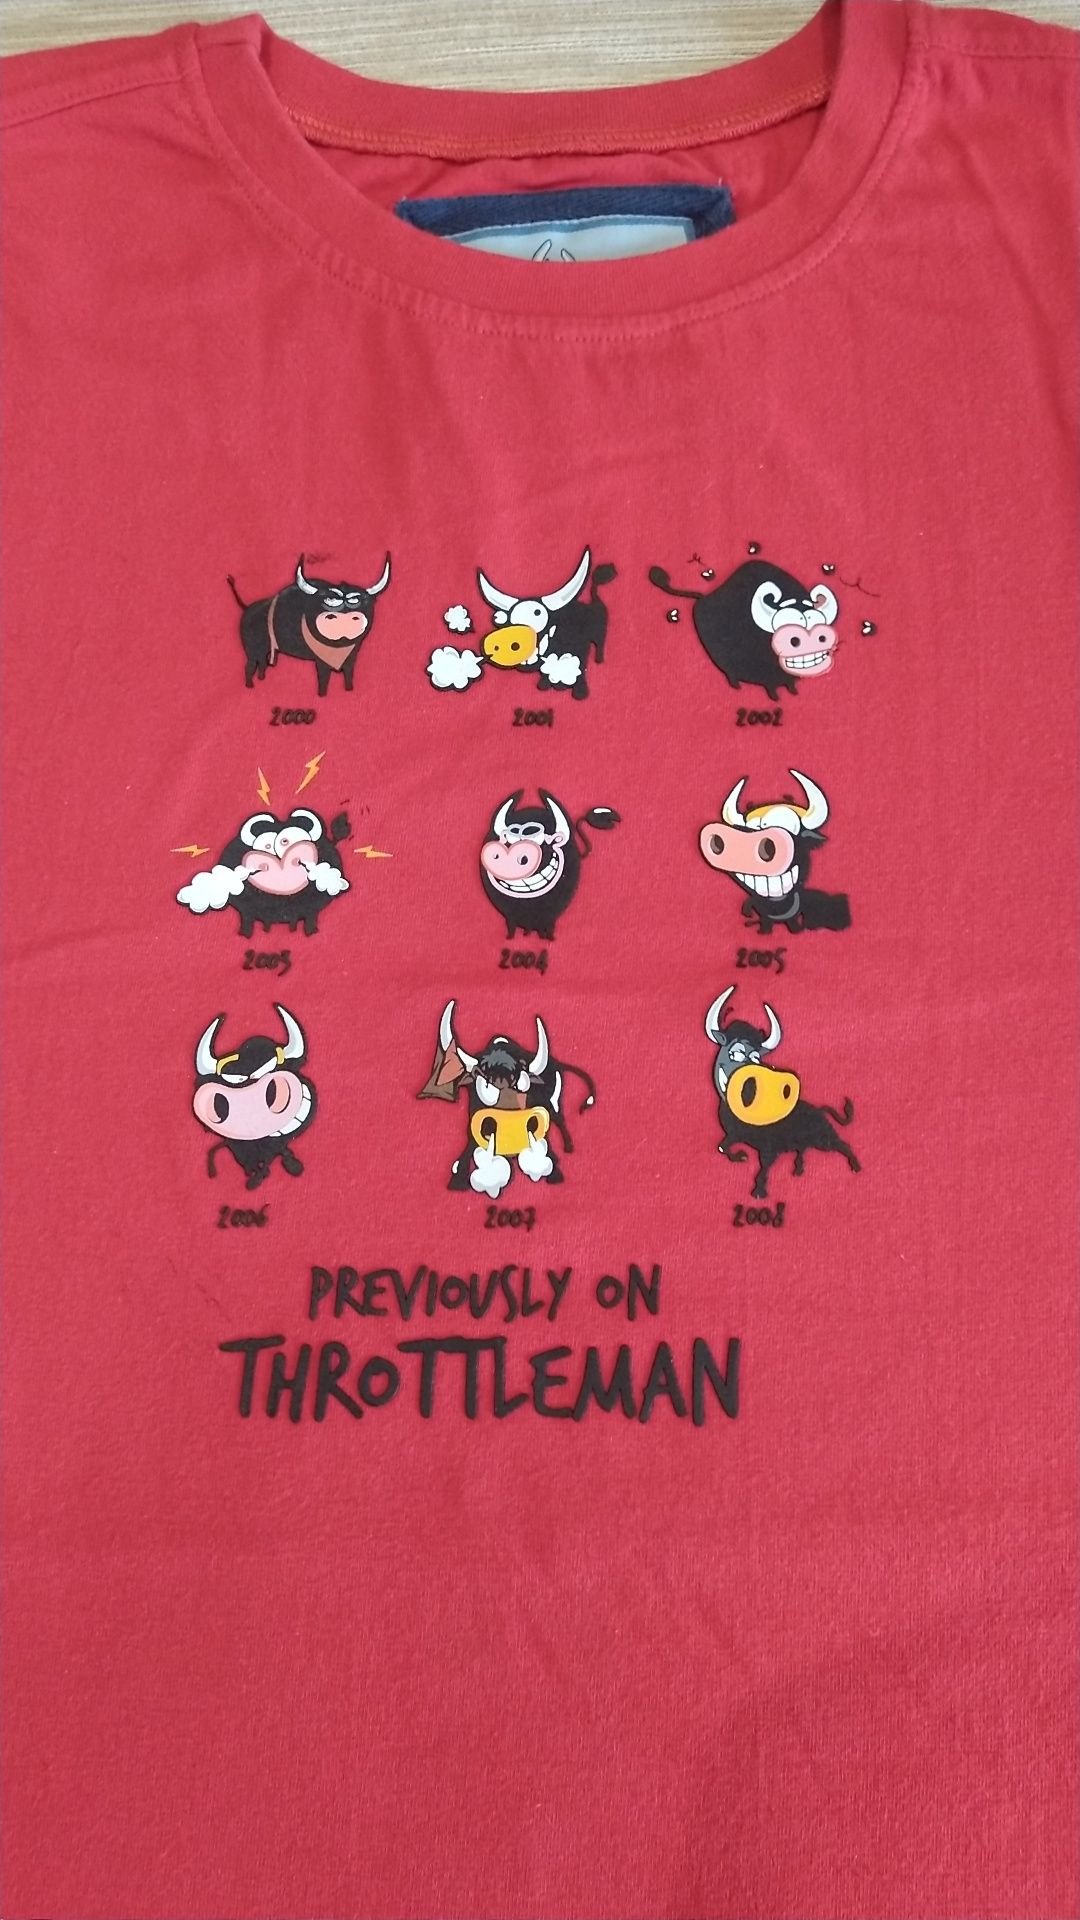 T-shirt / Camisola Throtlleman